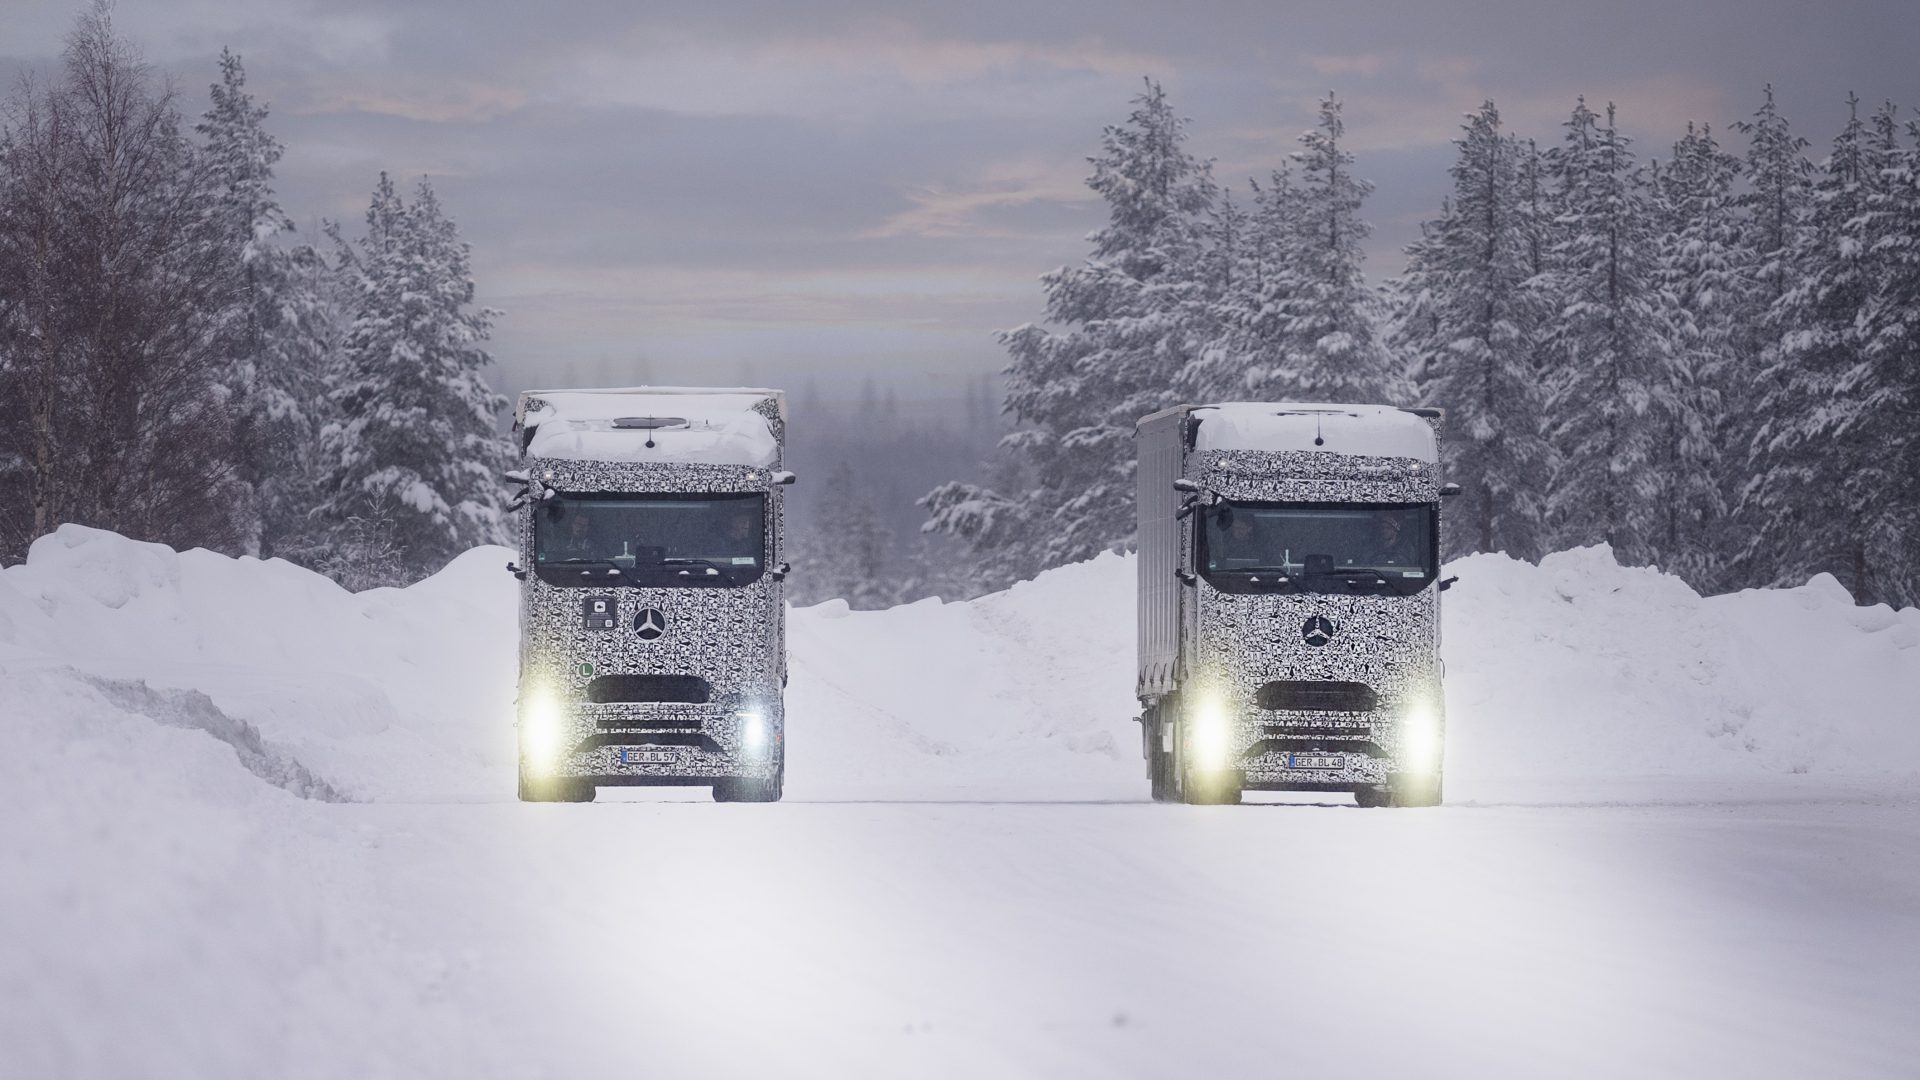 Mercedes-Benz Trucks schließt in Finnland letzte Wintererprobung des eActros 600 vor Serienstart erfolgreich abMercedes-Benz Trucks successfully completes final winter trials in Finland of the eActros 600 prior to start of series production